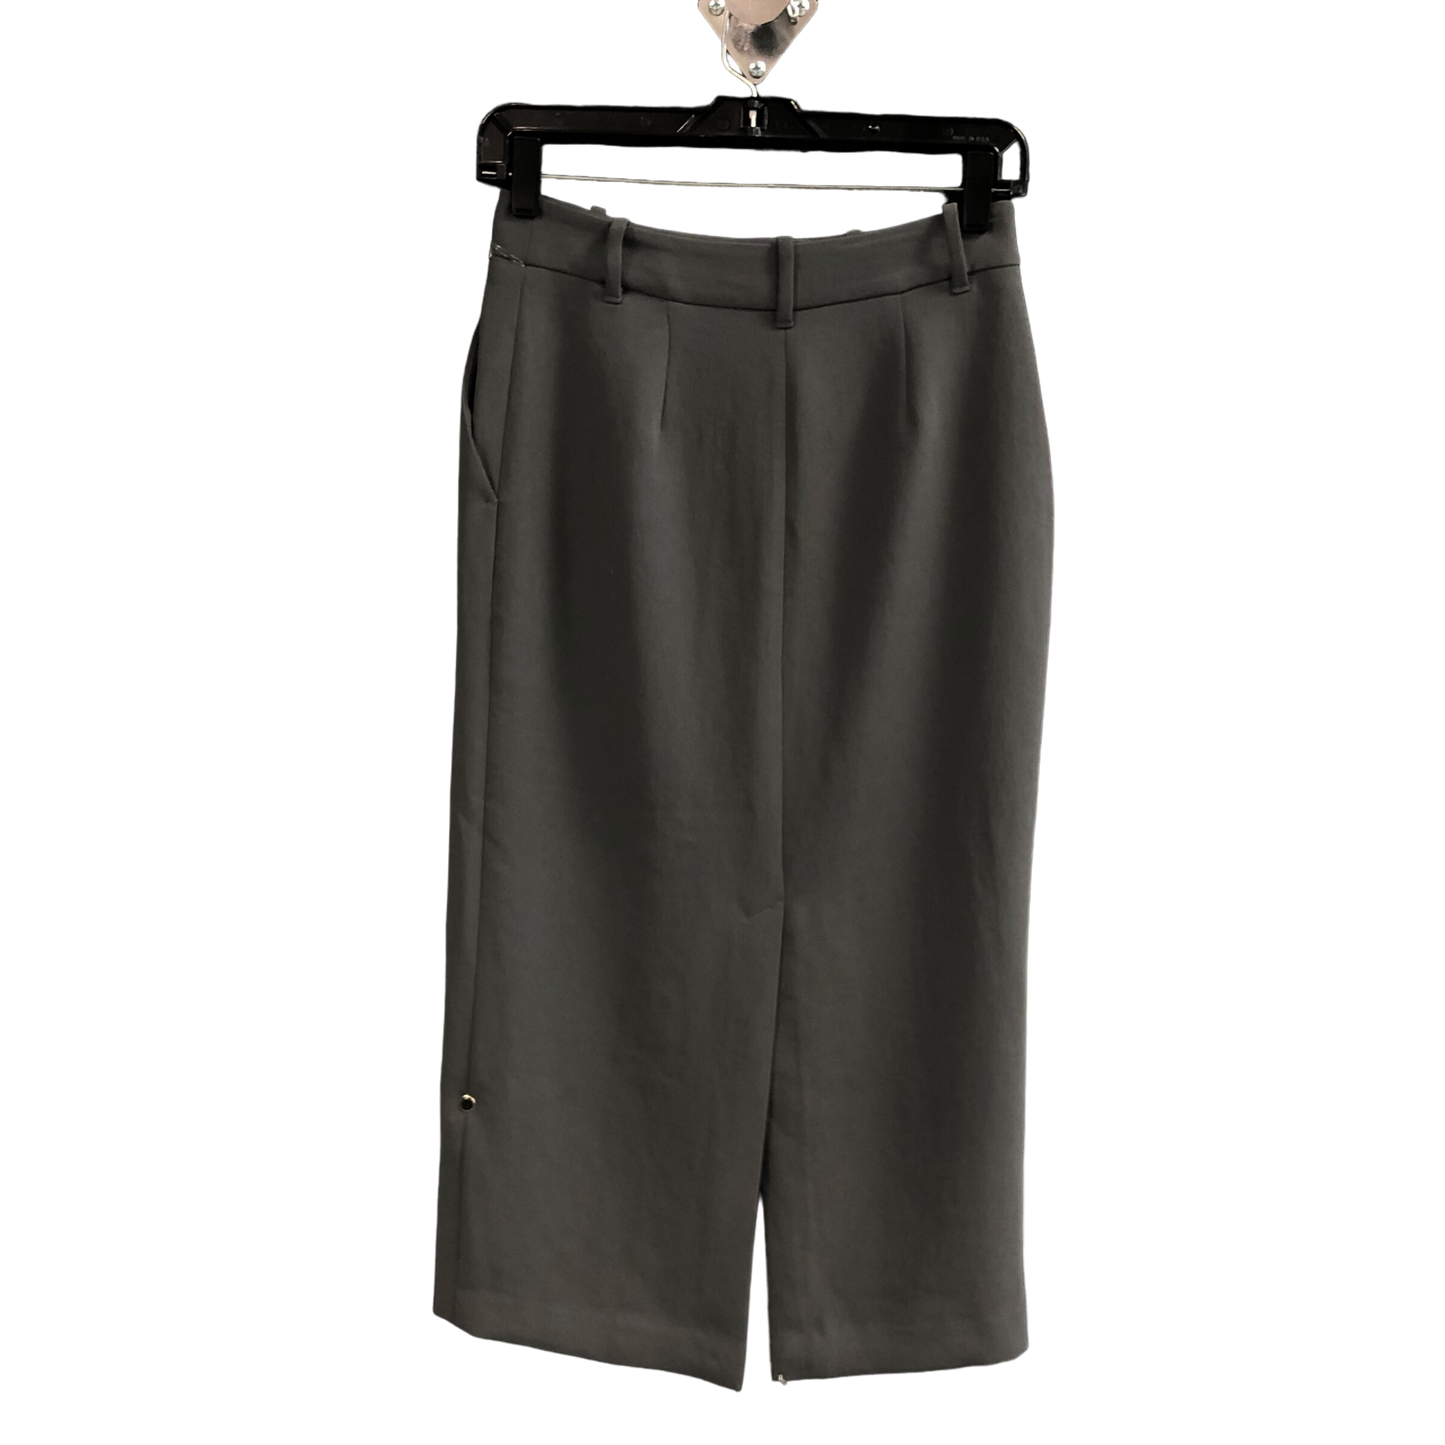 Grey Skirt Designer Wilfred, Size 0